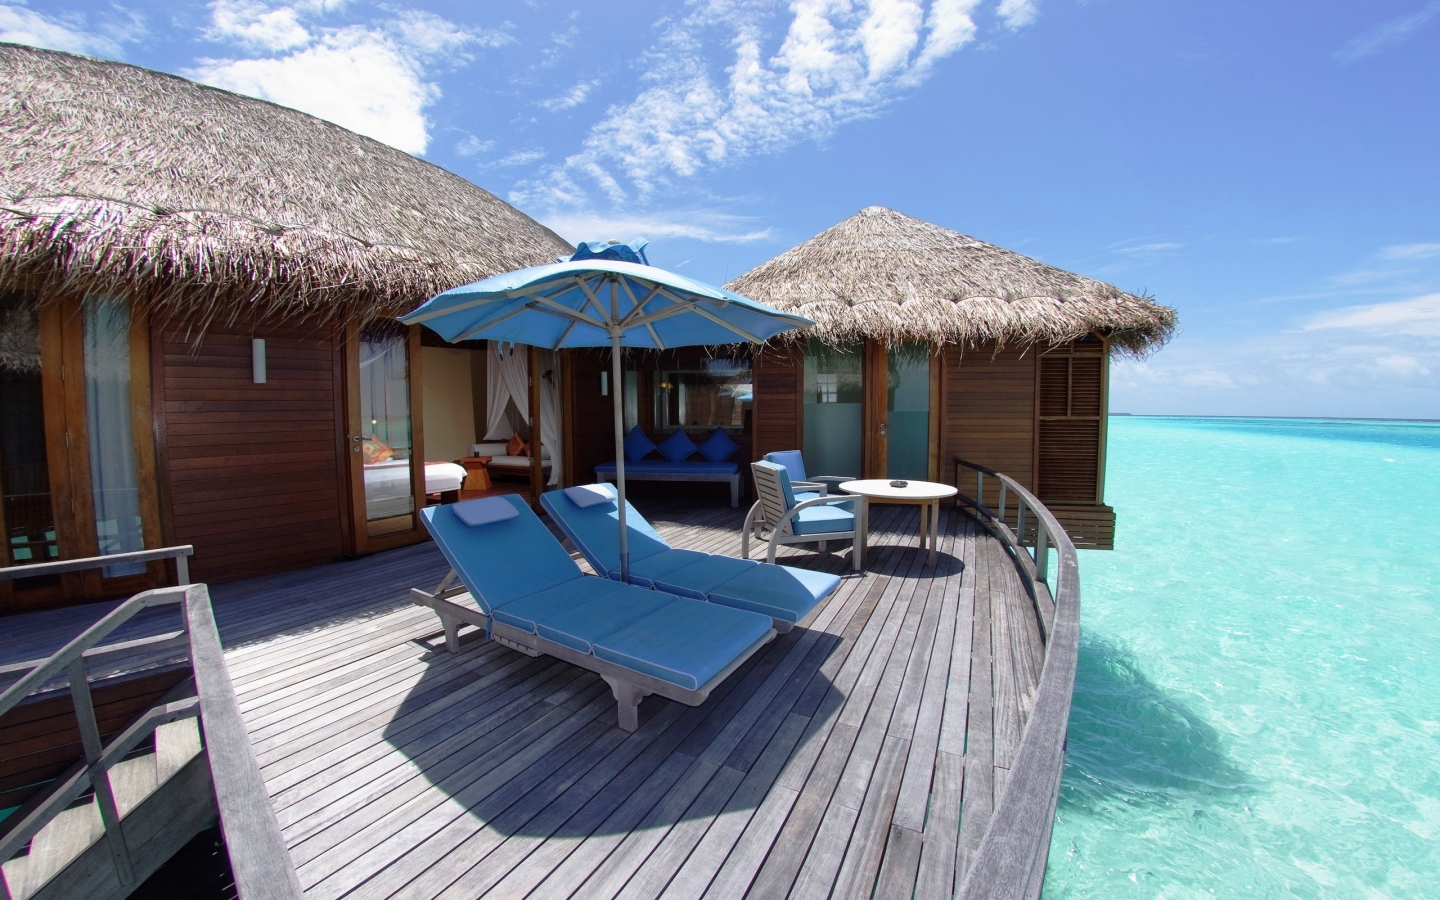 Maldives Resort for 1440 x 900 widescreen resolution